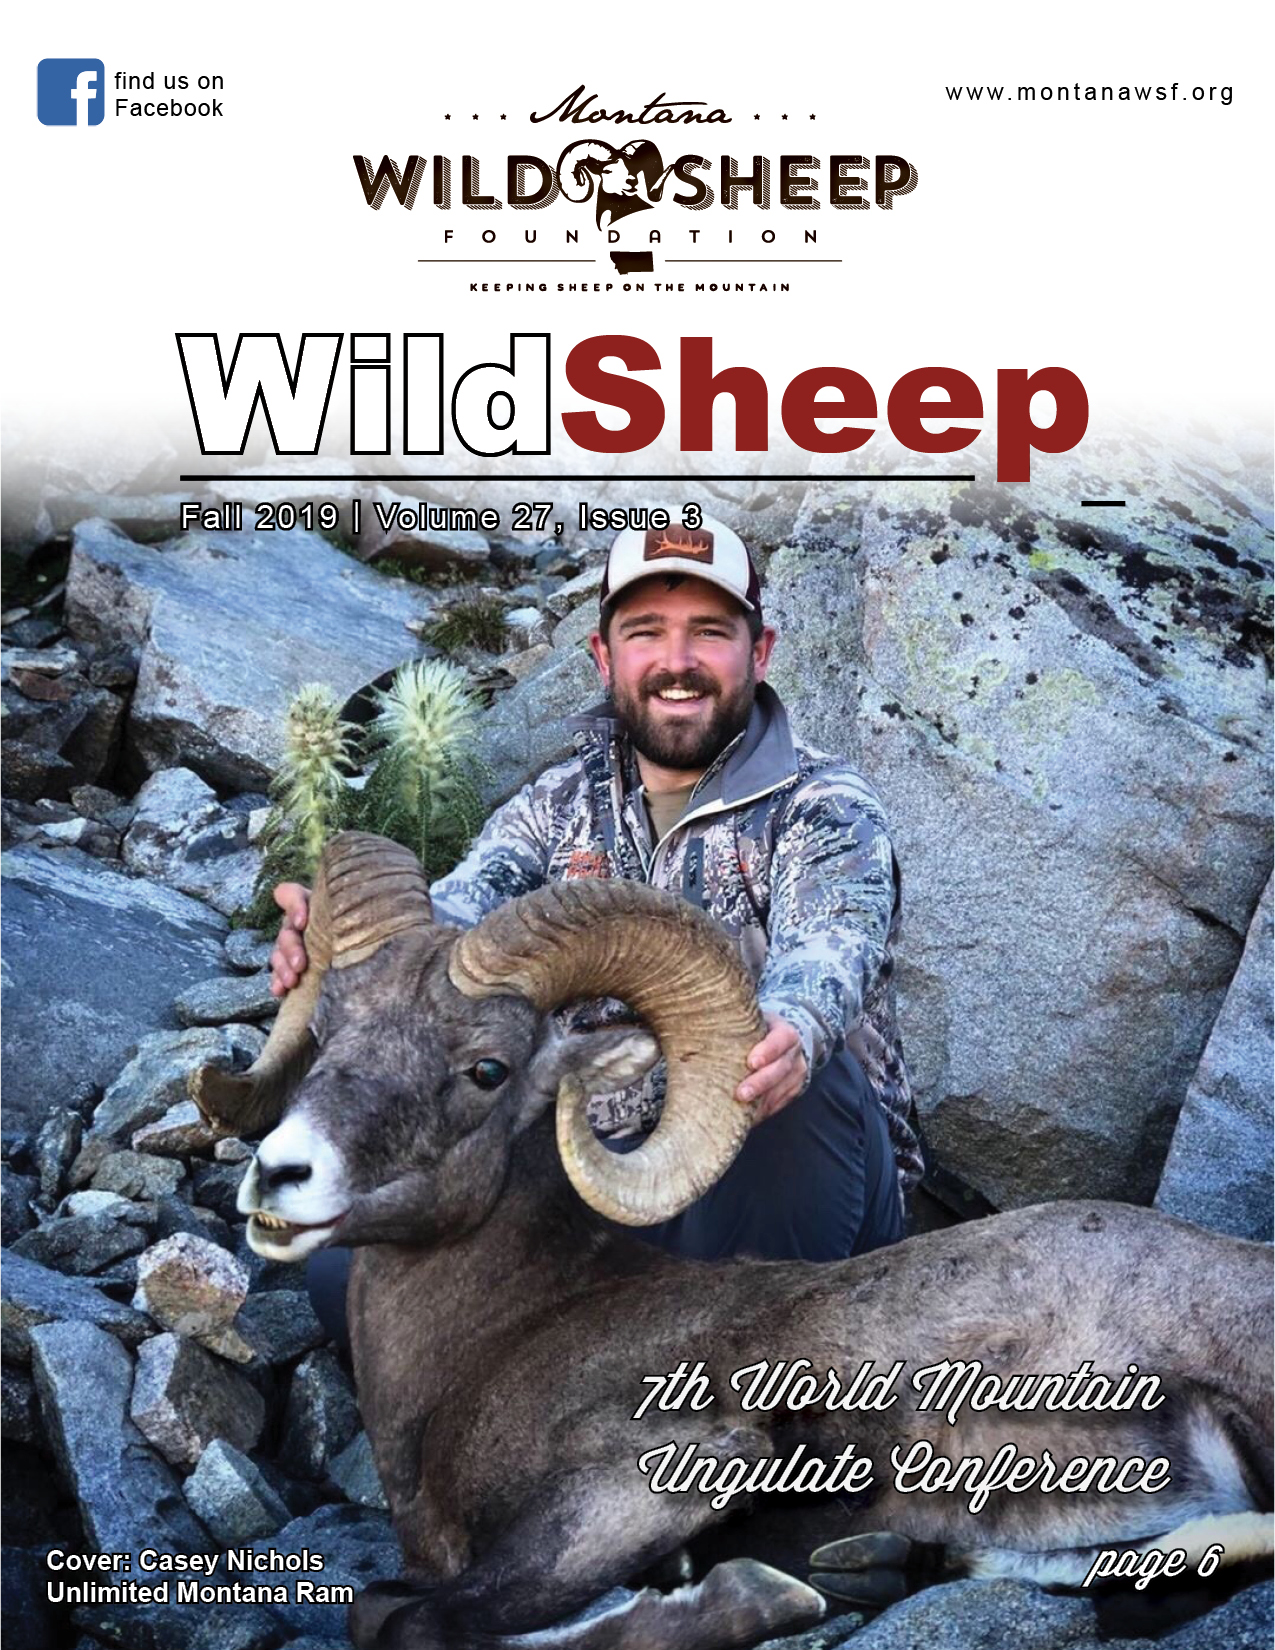 Fall 2019 Montana WildSheep Foundation Newsletter